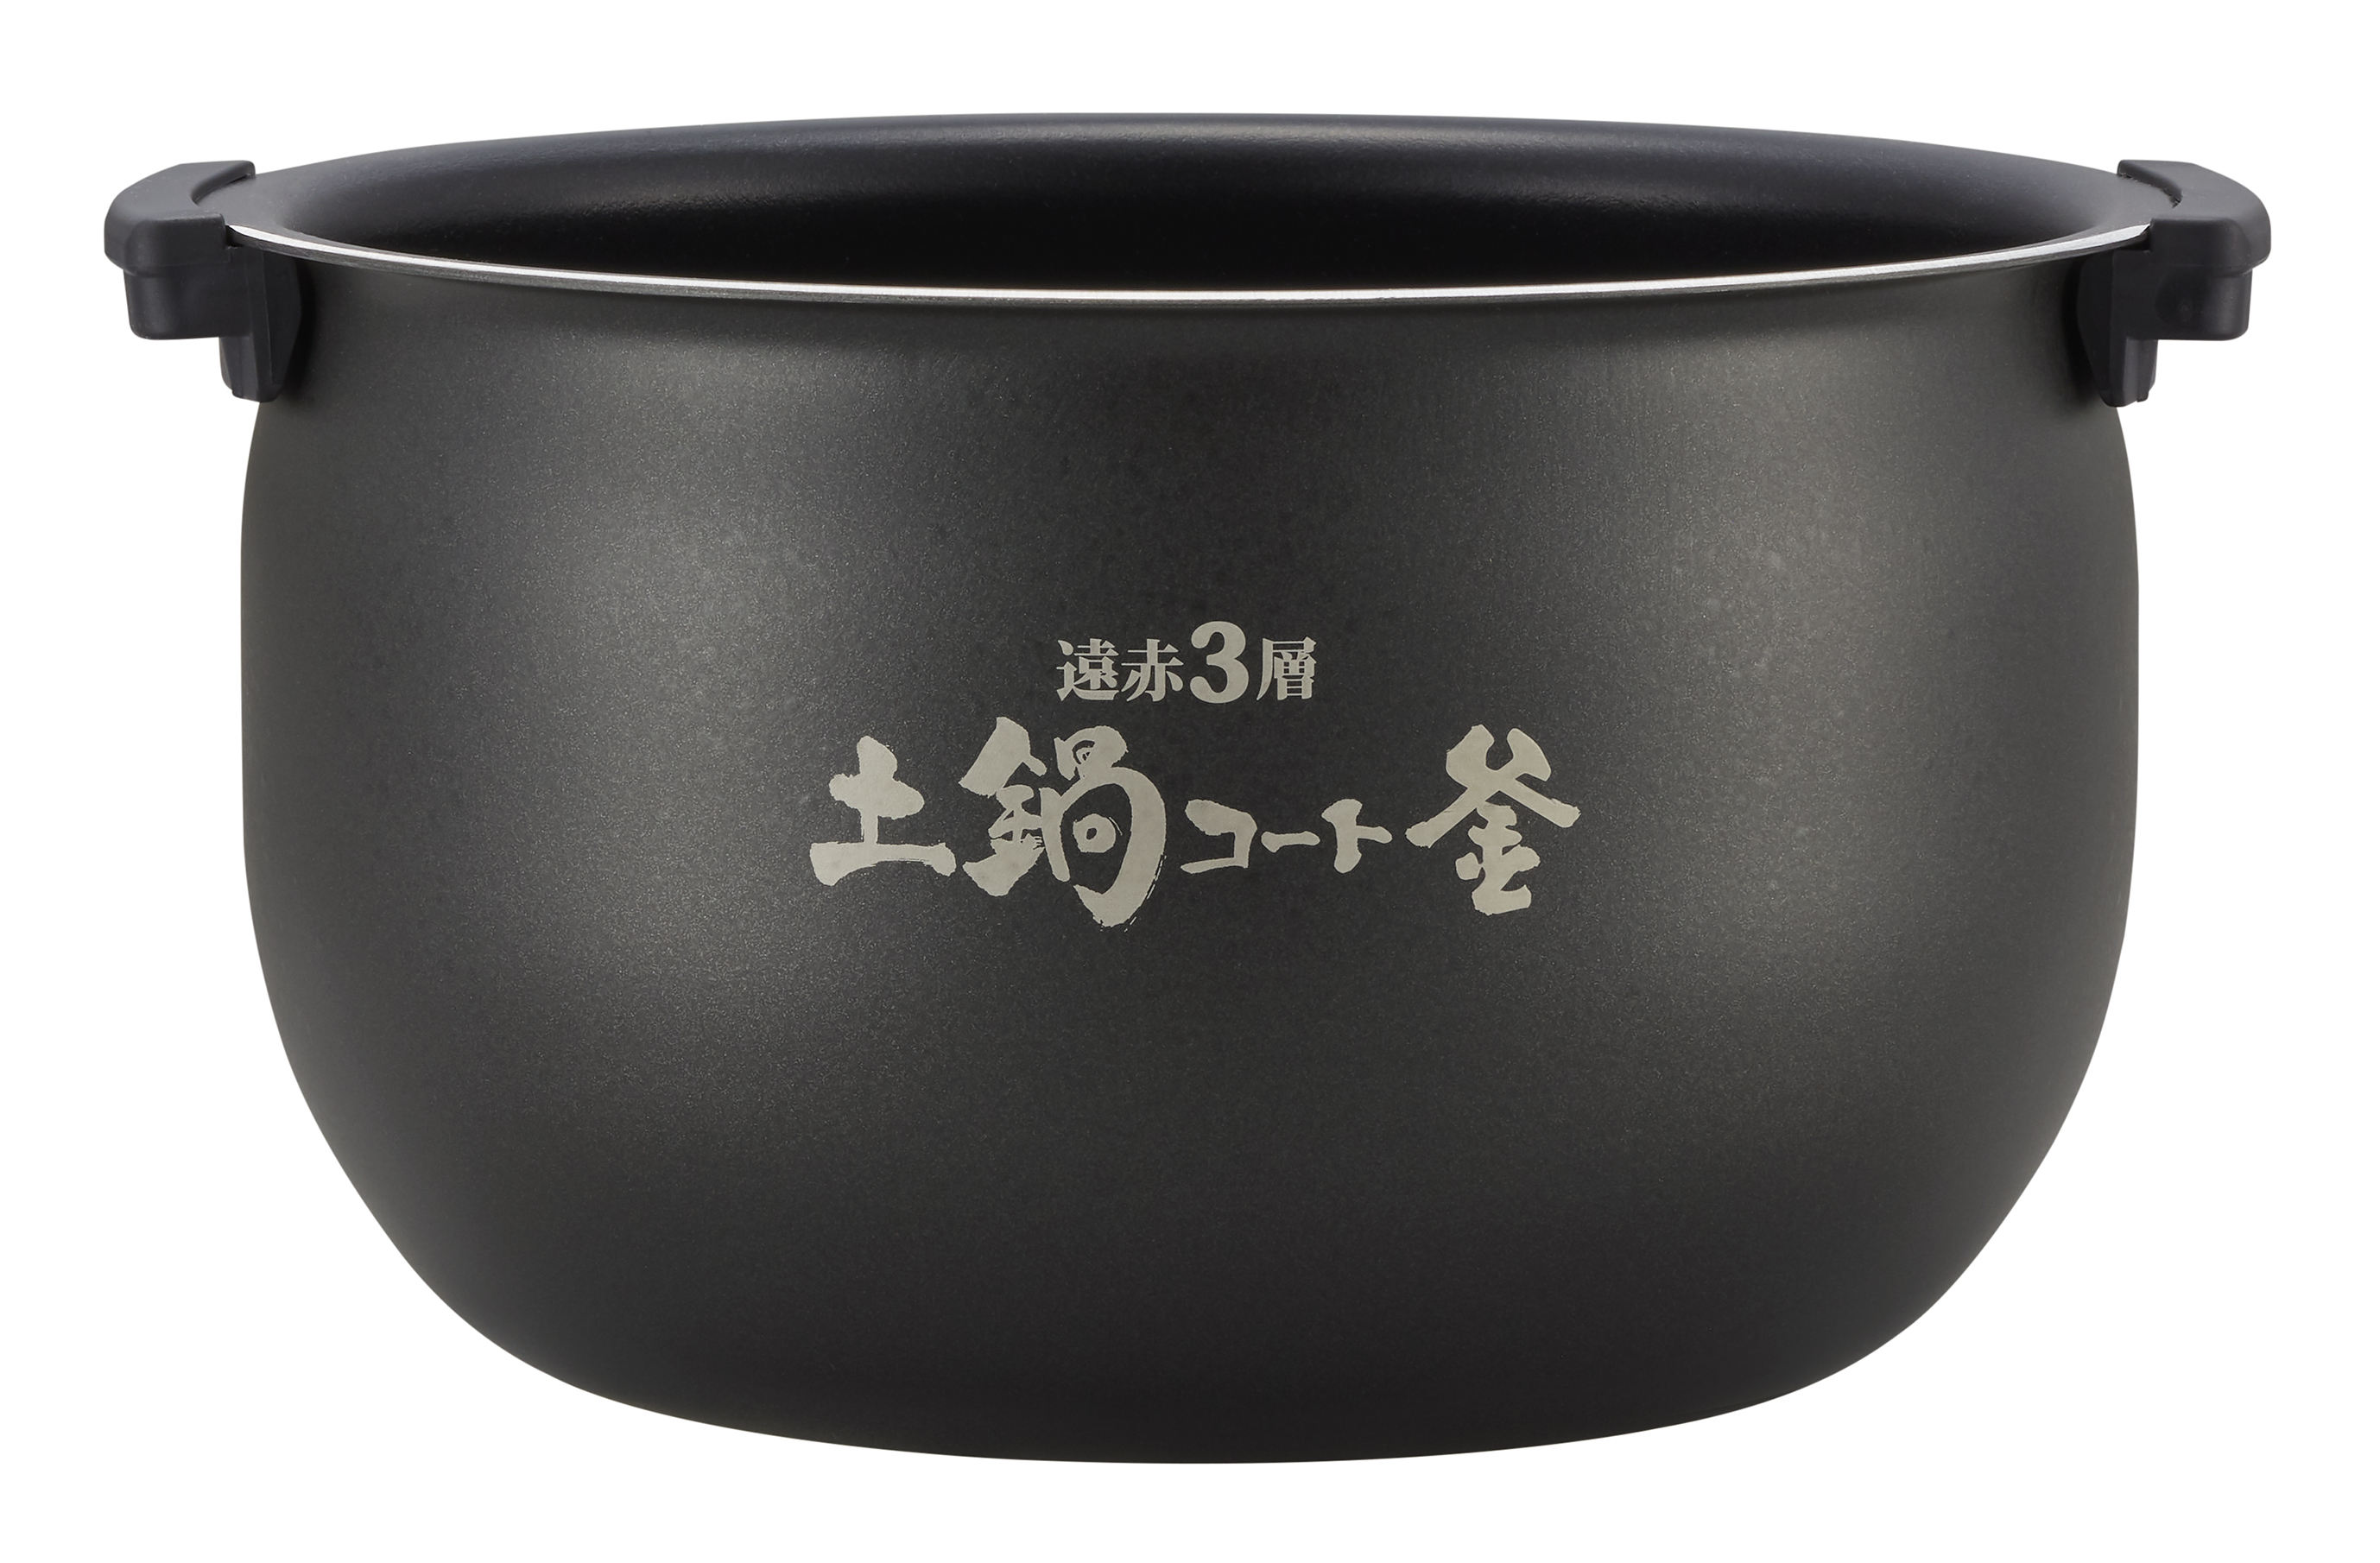 made-in-japan-induction-heating-rice-cooker-jkt-d-12-ceramic-coating.jpg (1.68 MB)